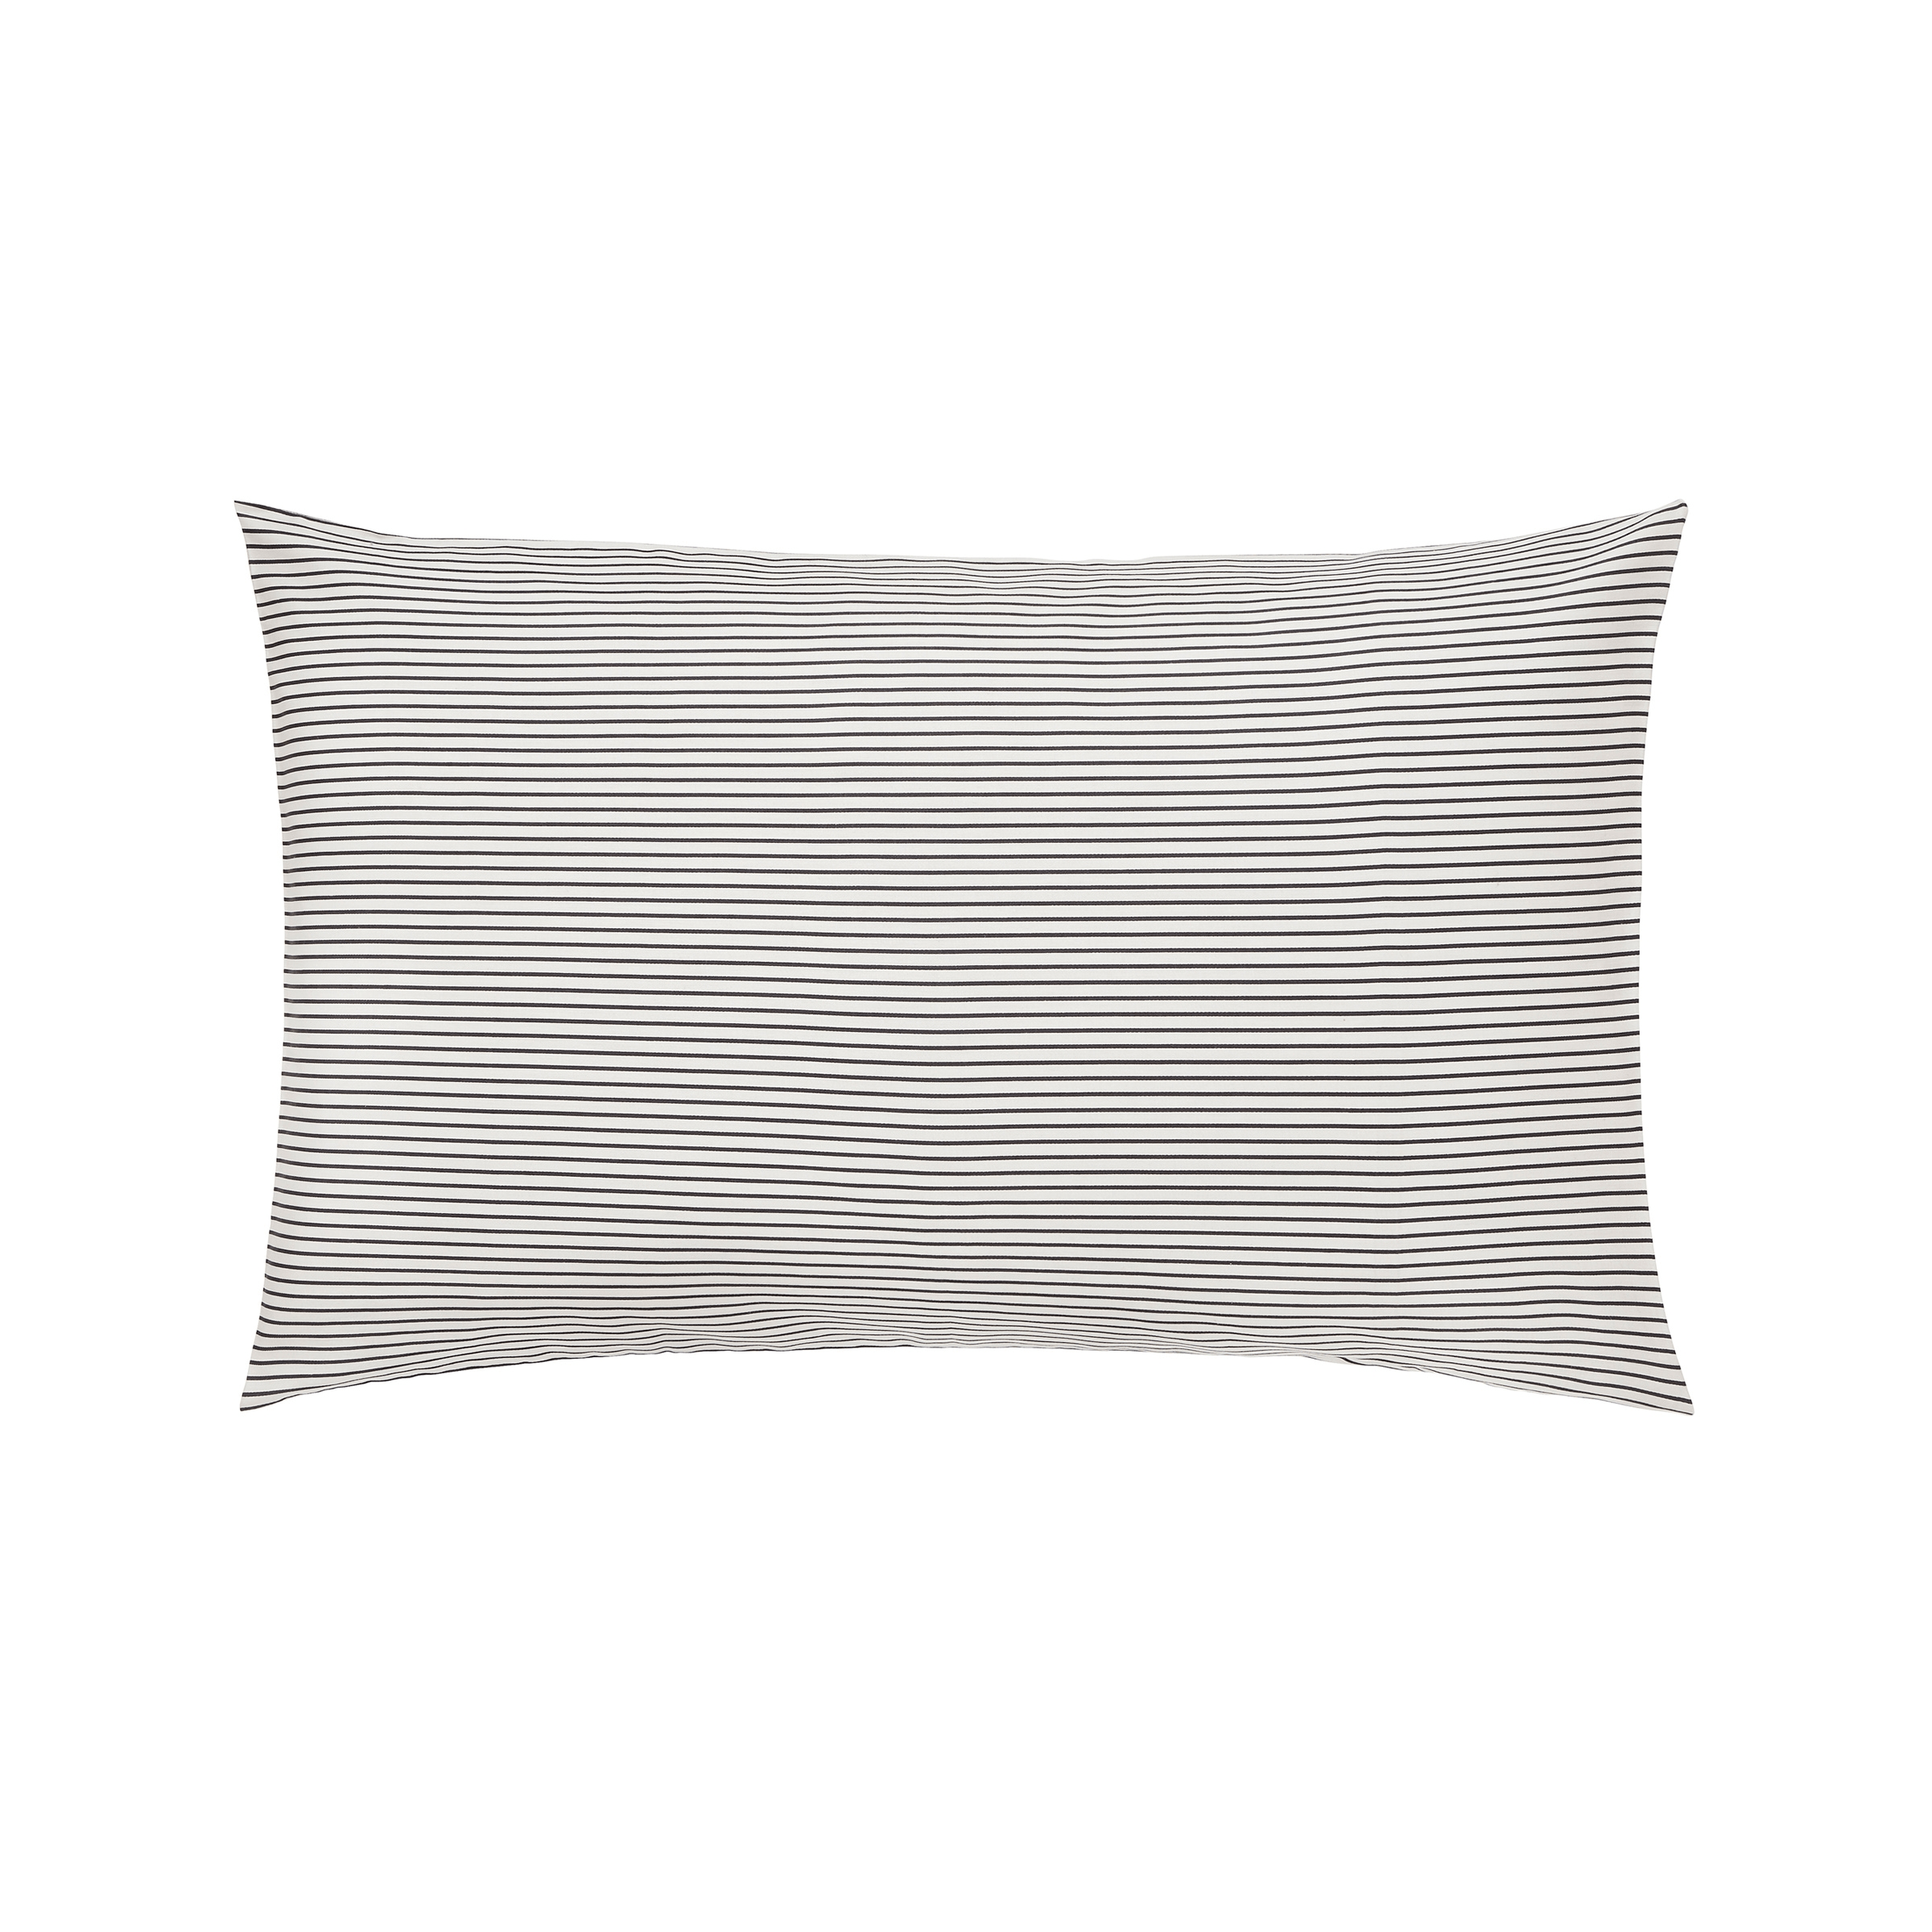 Banzai Standard Pillowcase in Magenta Bedding by Harlequin